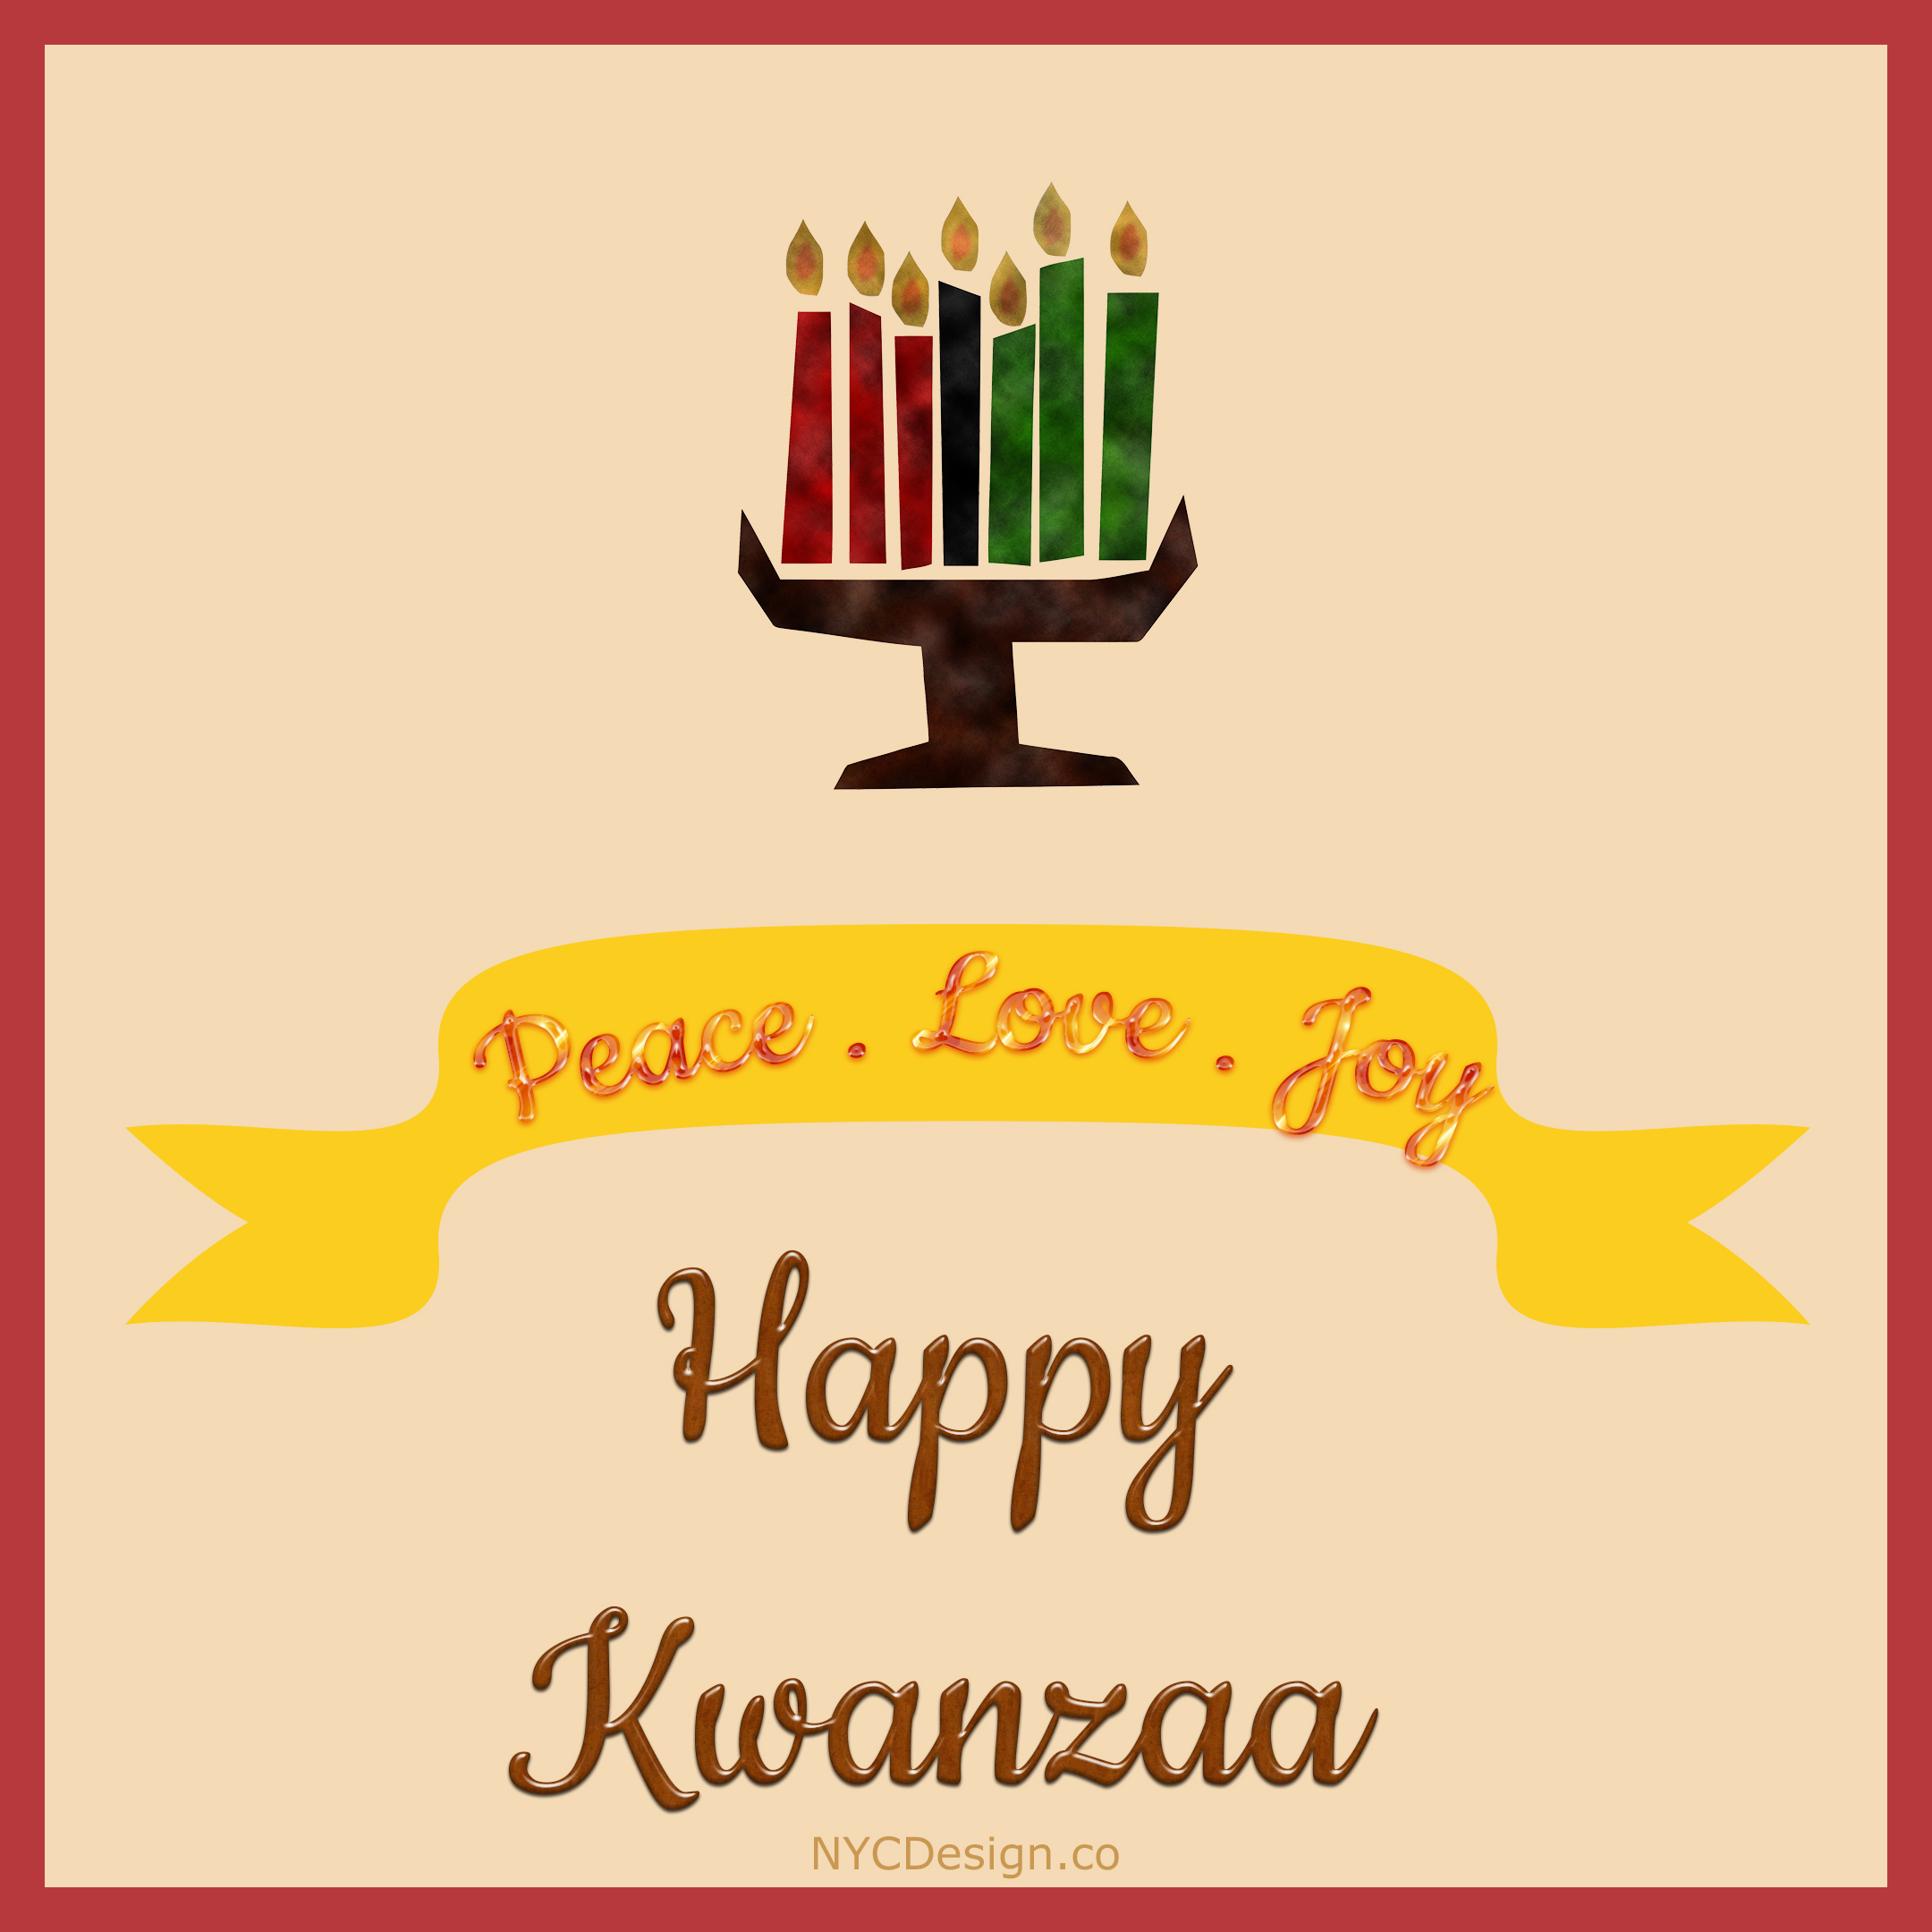 Happy Kwanzaa Cards, Free, Printable NYCDesign.co Calendars